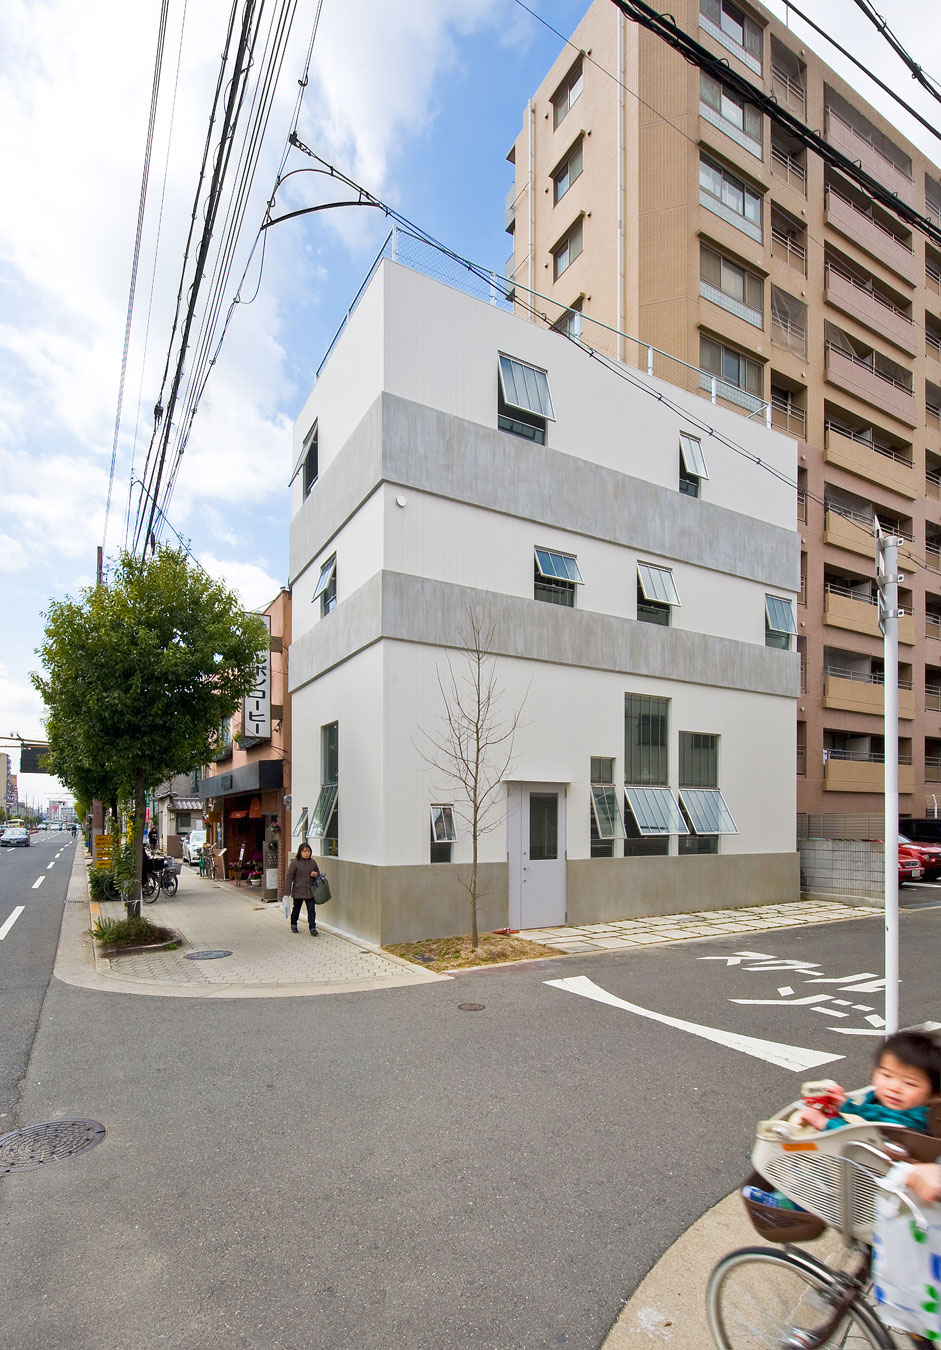 K House / Kimura Matsumoto